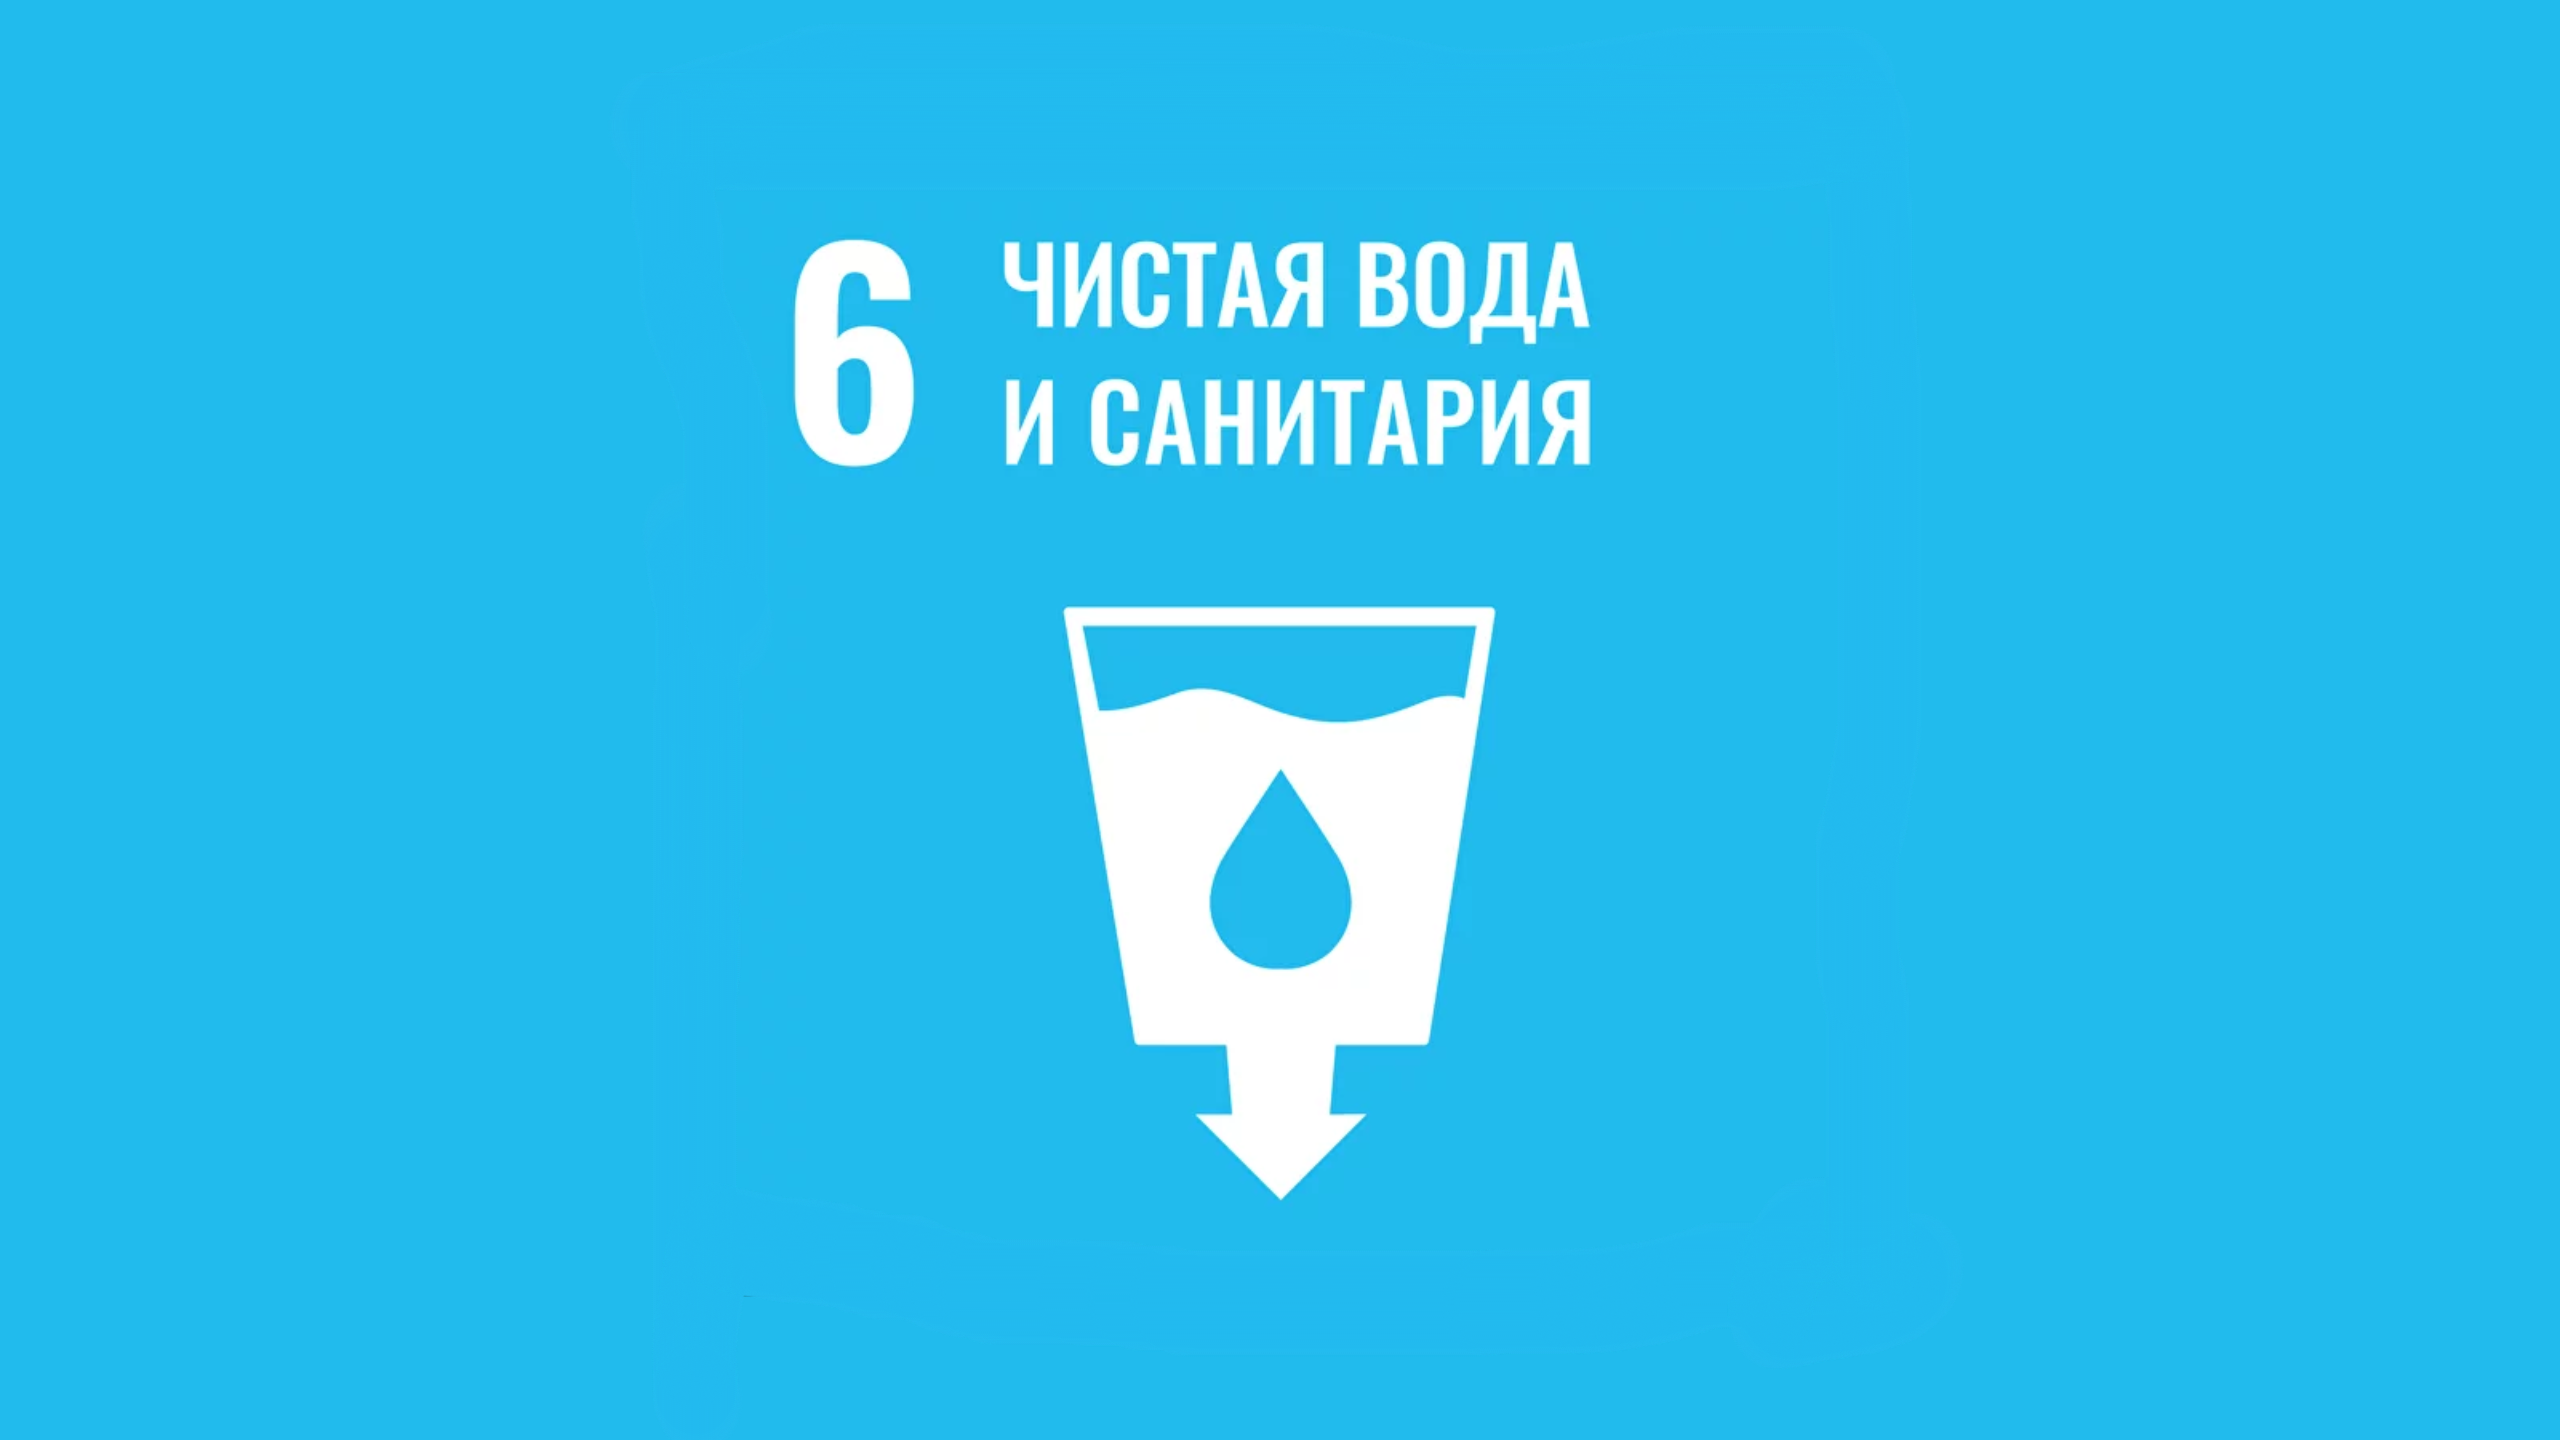 czur 6 oblozhka - ЦУР 6: Чистая вода и санитария